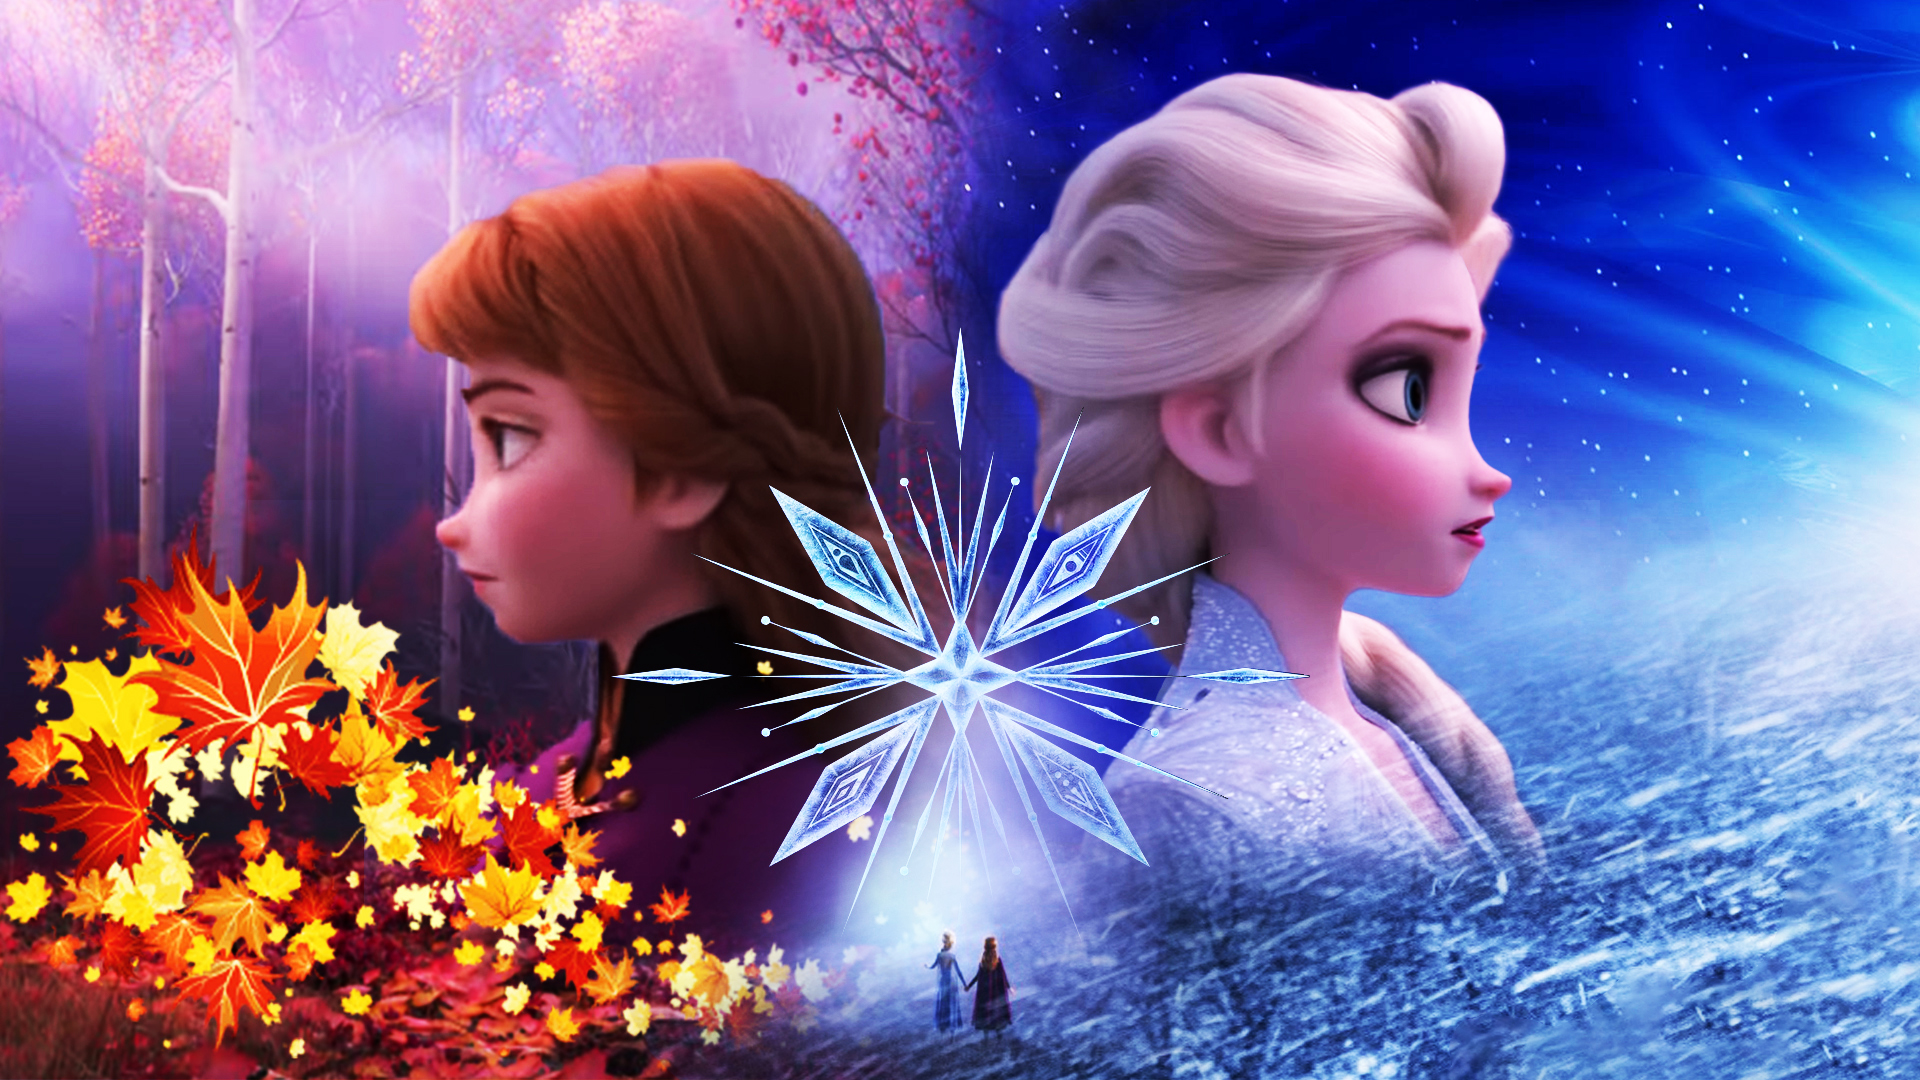 Is Hans Back For Frozen 3? #fyp #disney #frozen, Frozen 3 Release Date